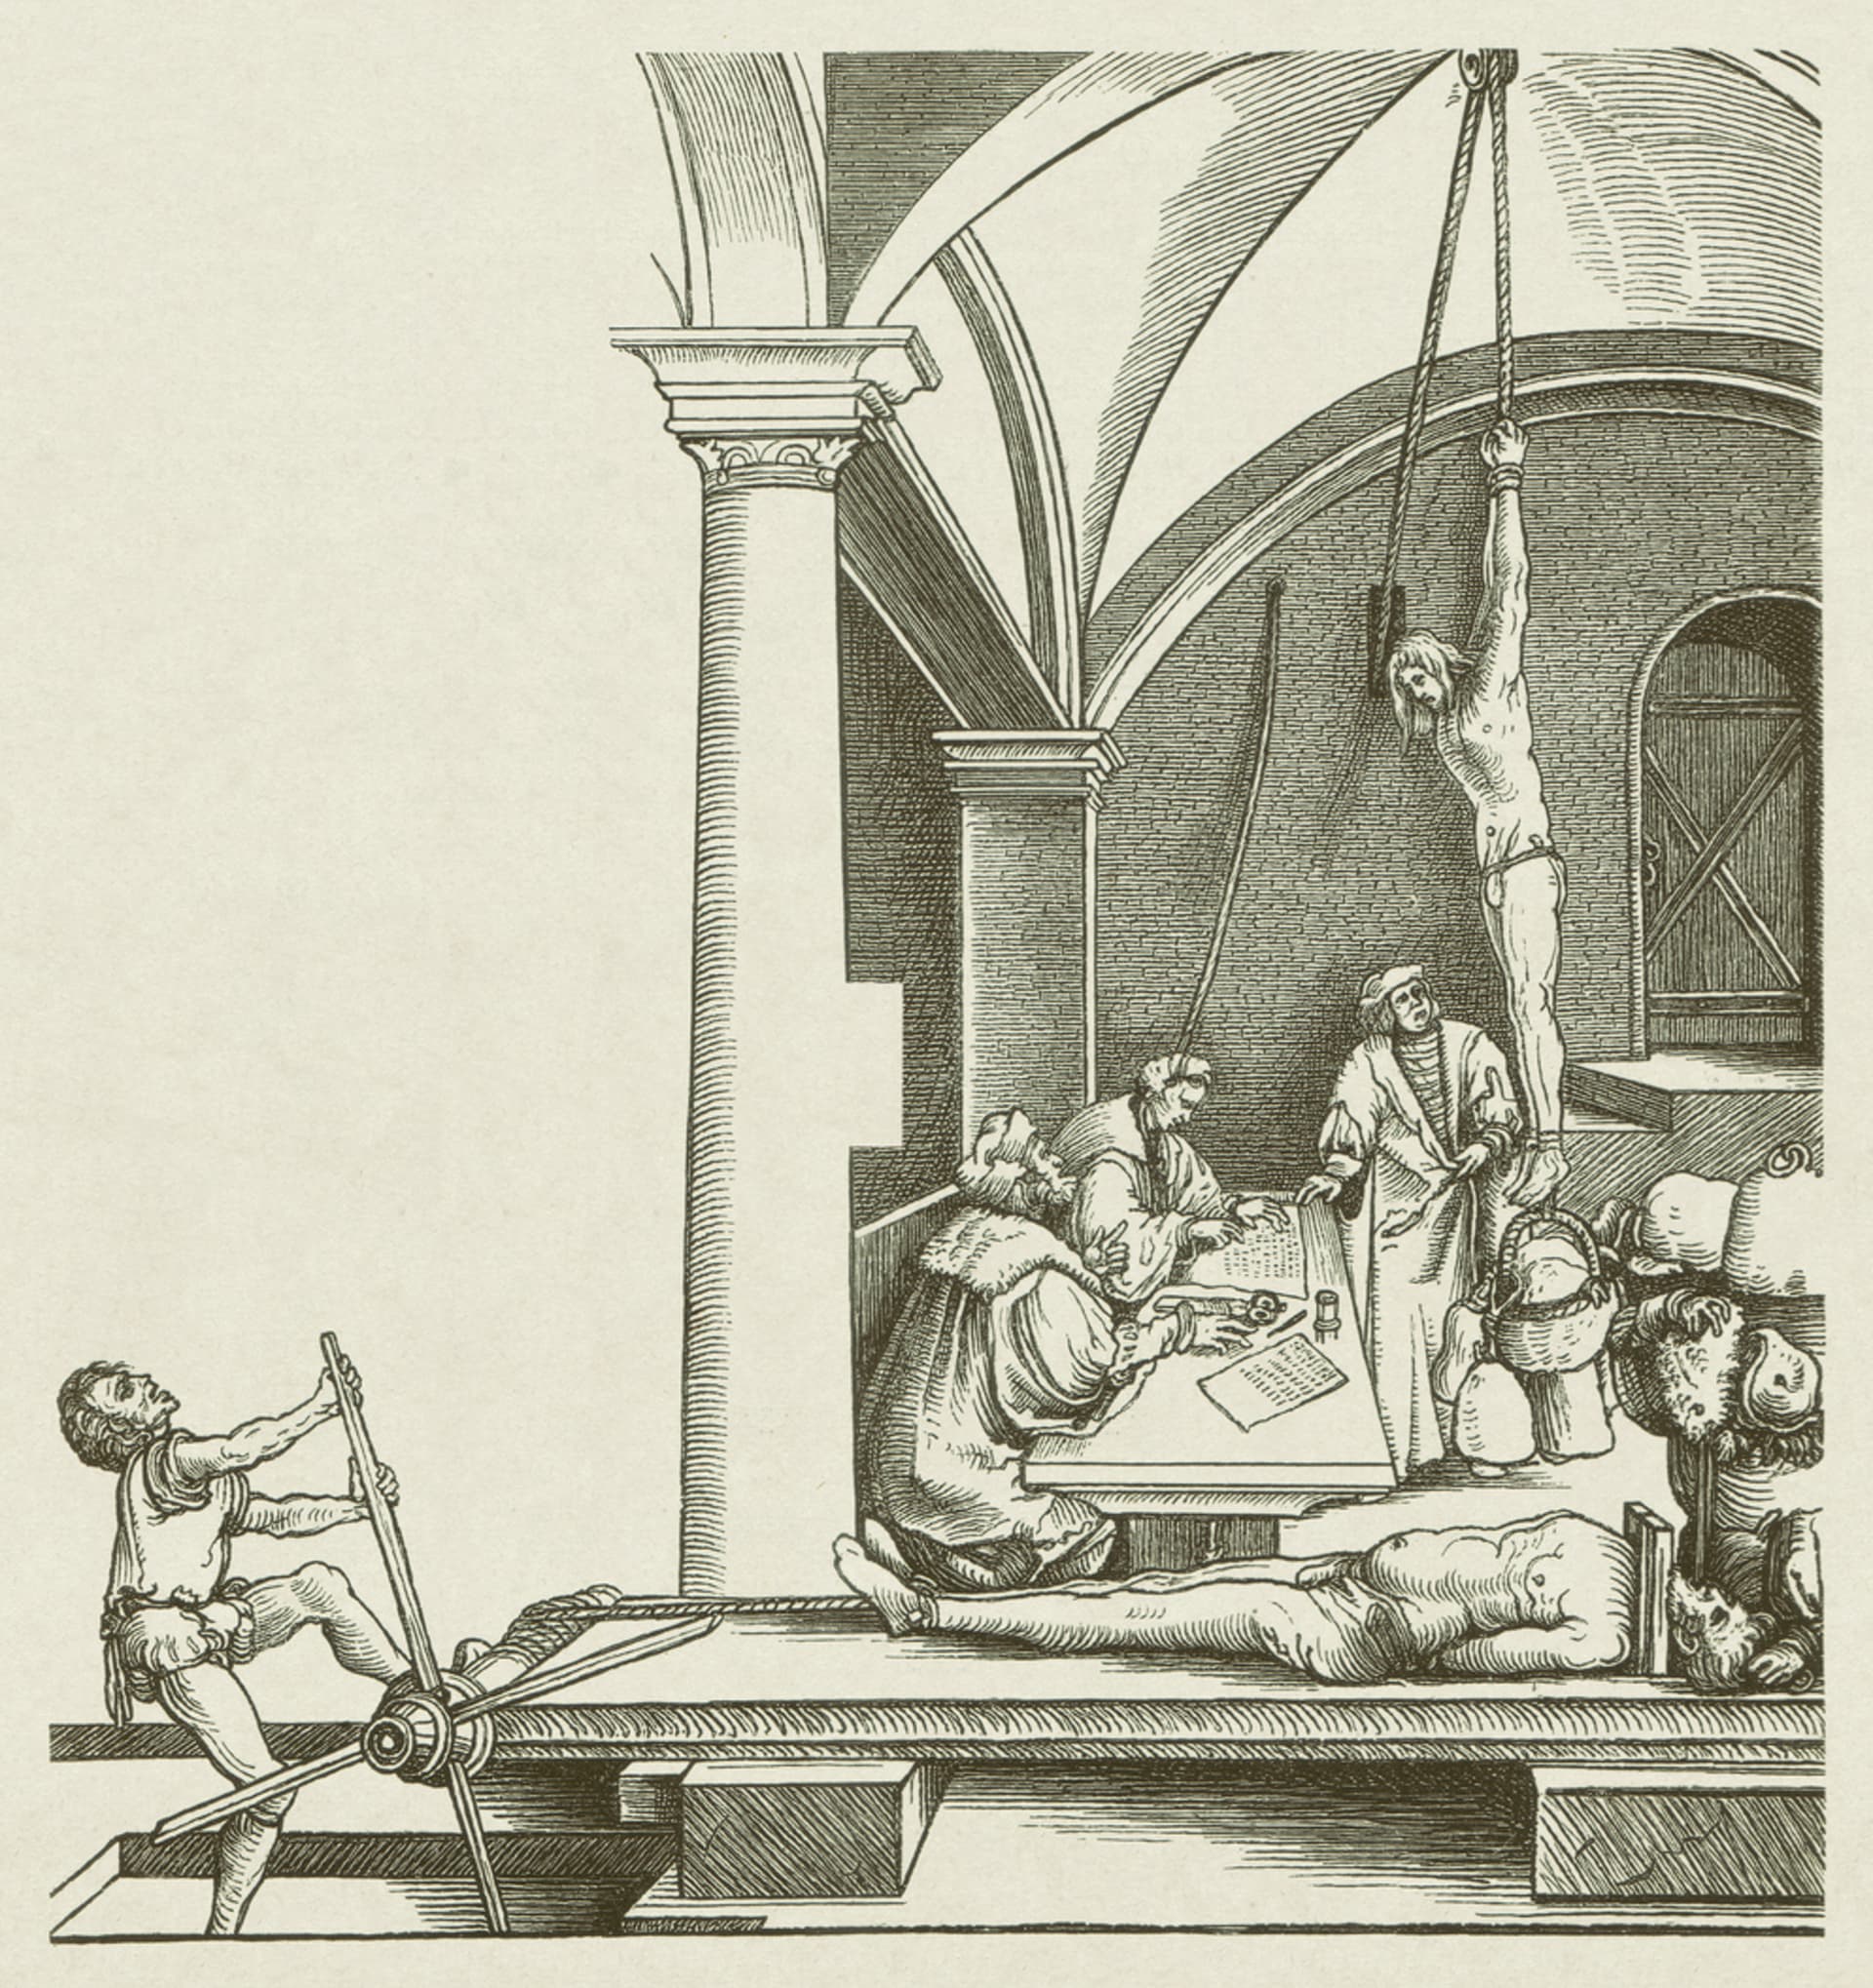 Obrázek mučírny 16. století